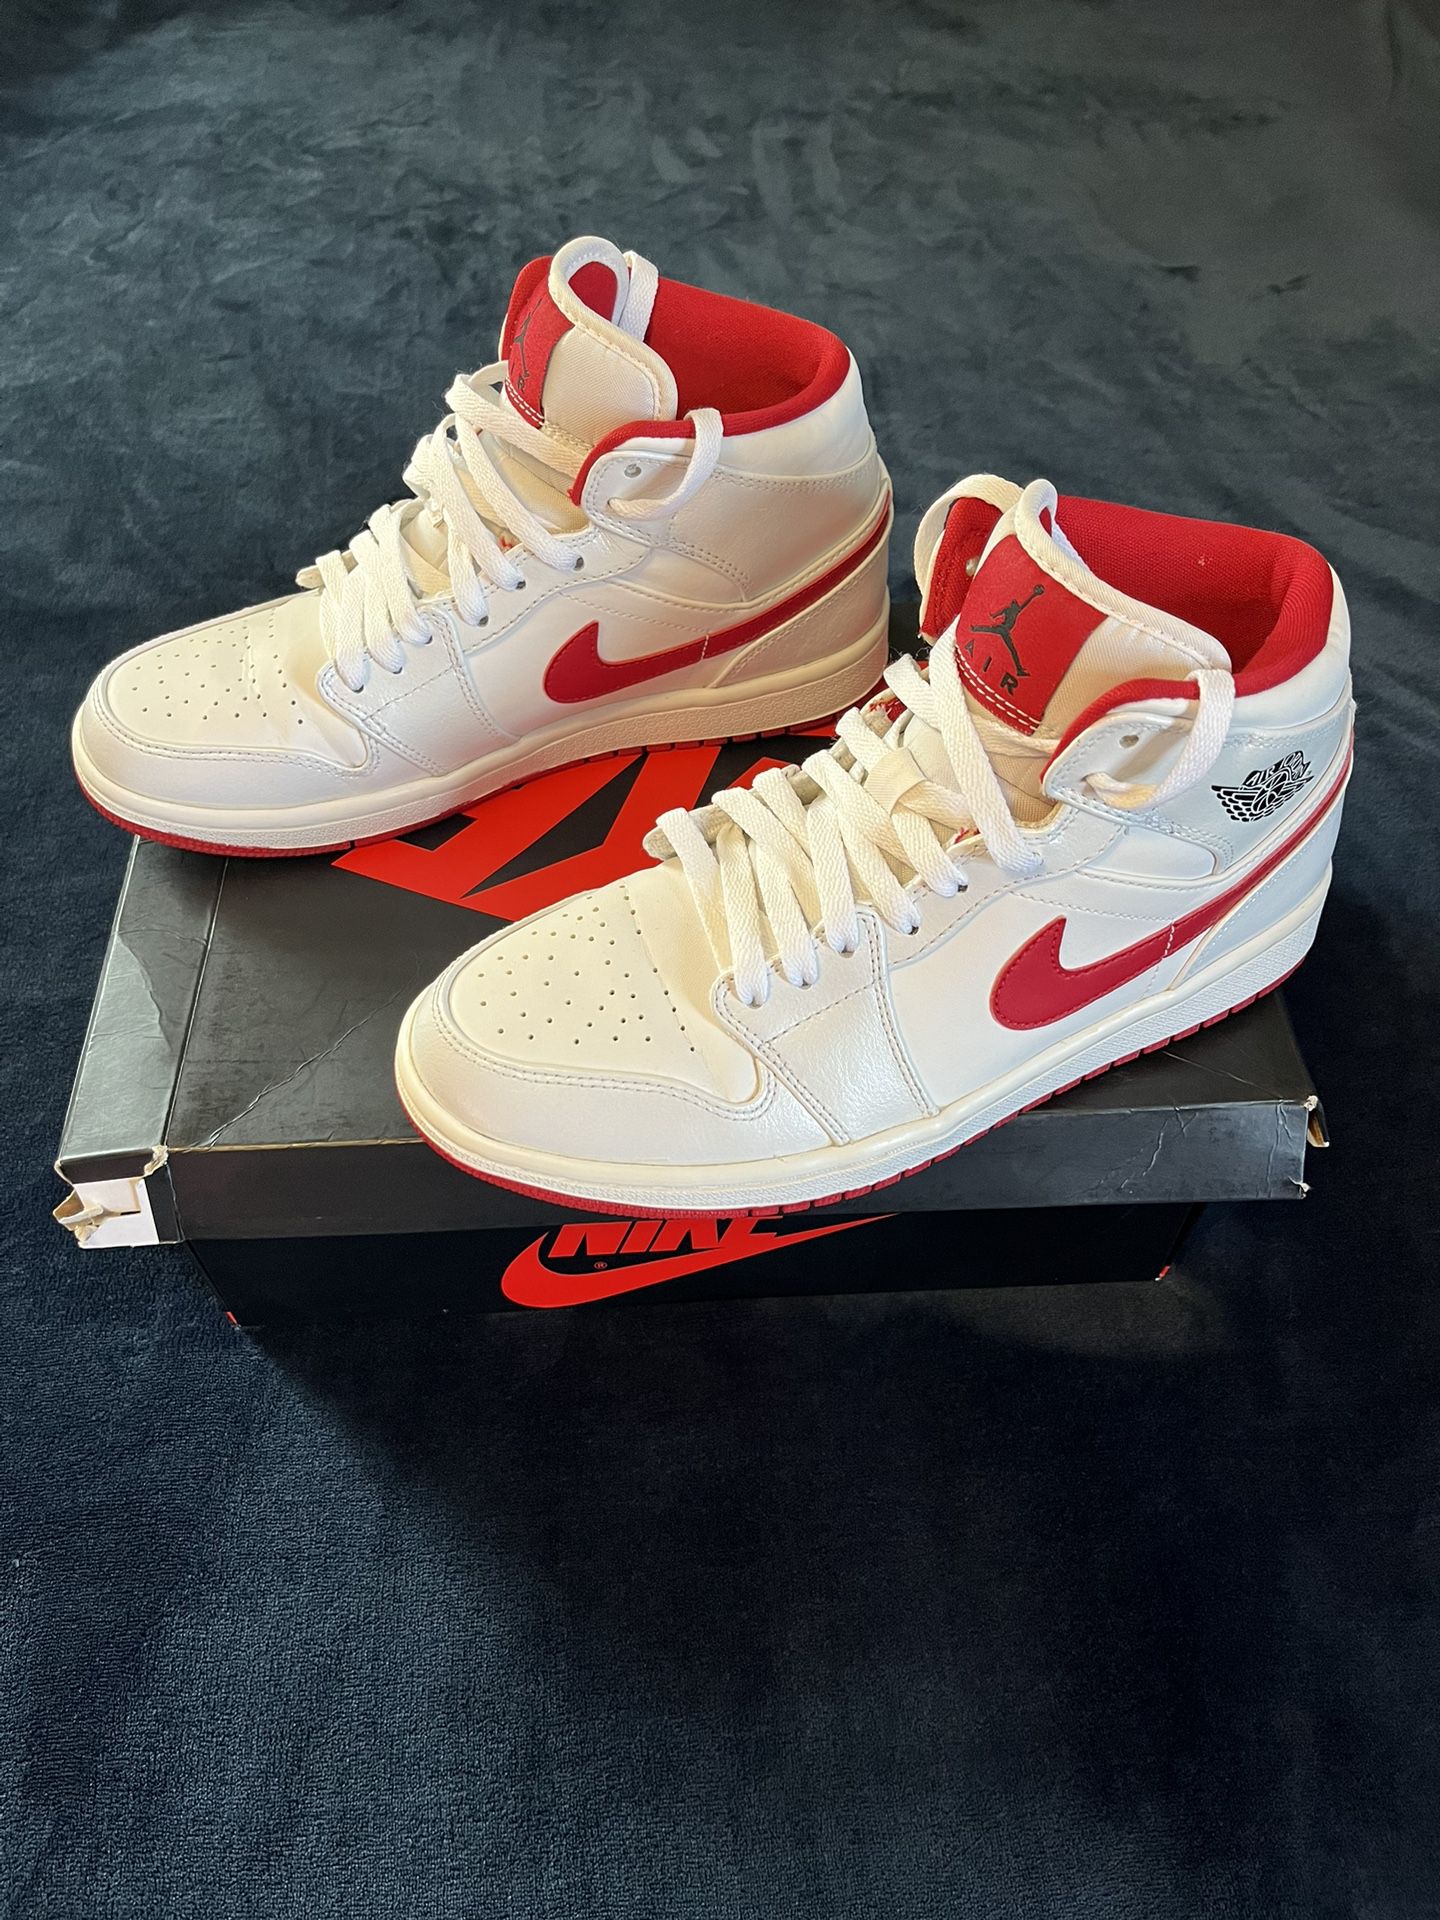 Nike Air Jordan 1 Retro Mid Red White 2017 554724-101 Basketball Shoe 8